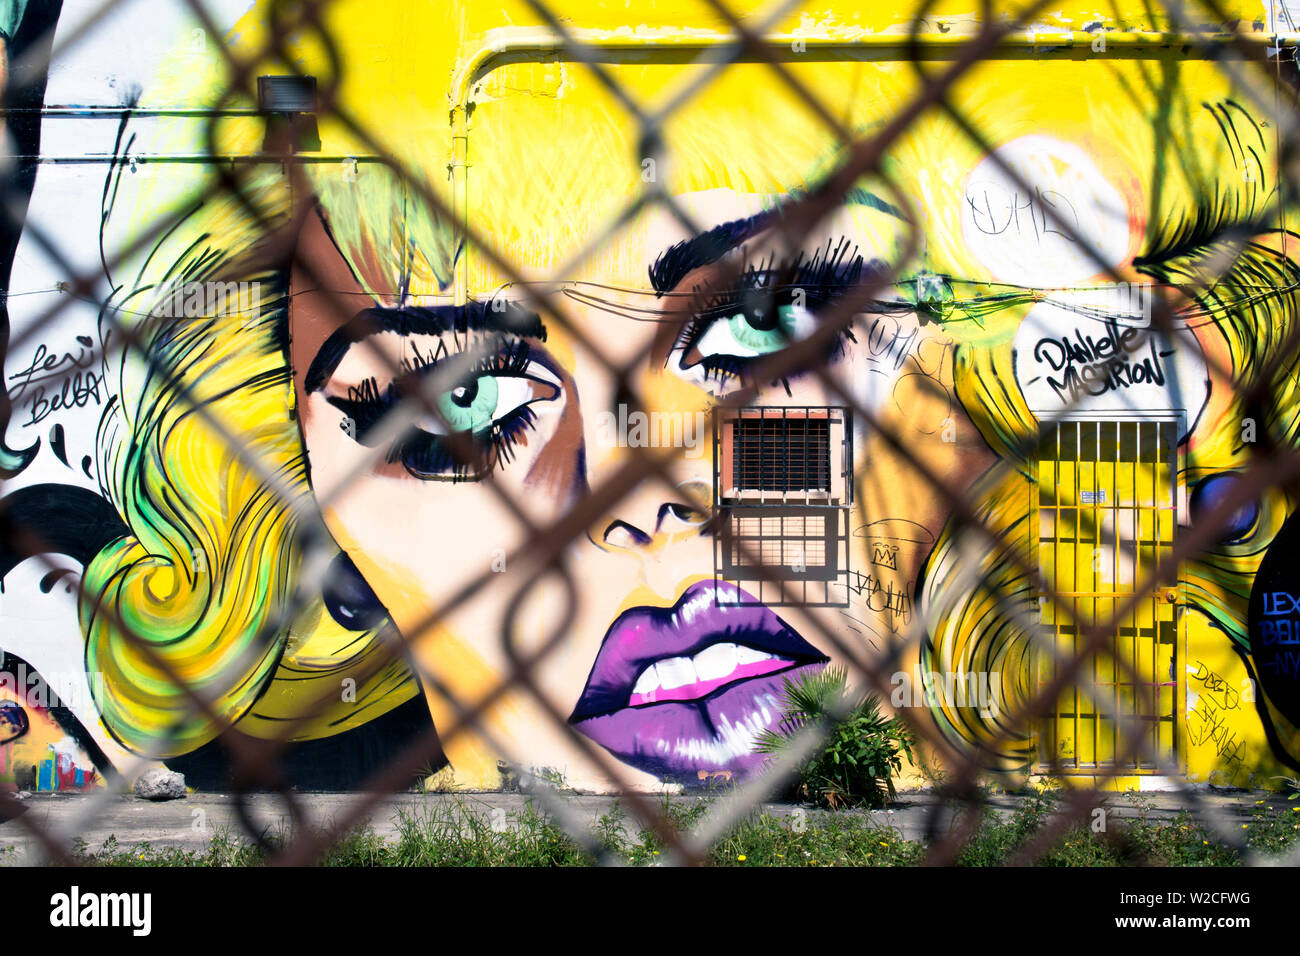 Graffiti arte de la calle en el distrito de arte Wynwood de Miami, Florida, USA. Foto de stock